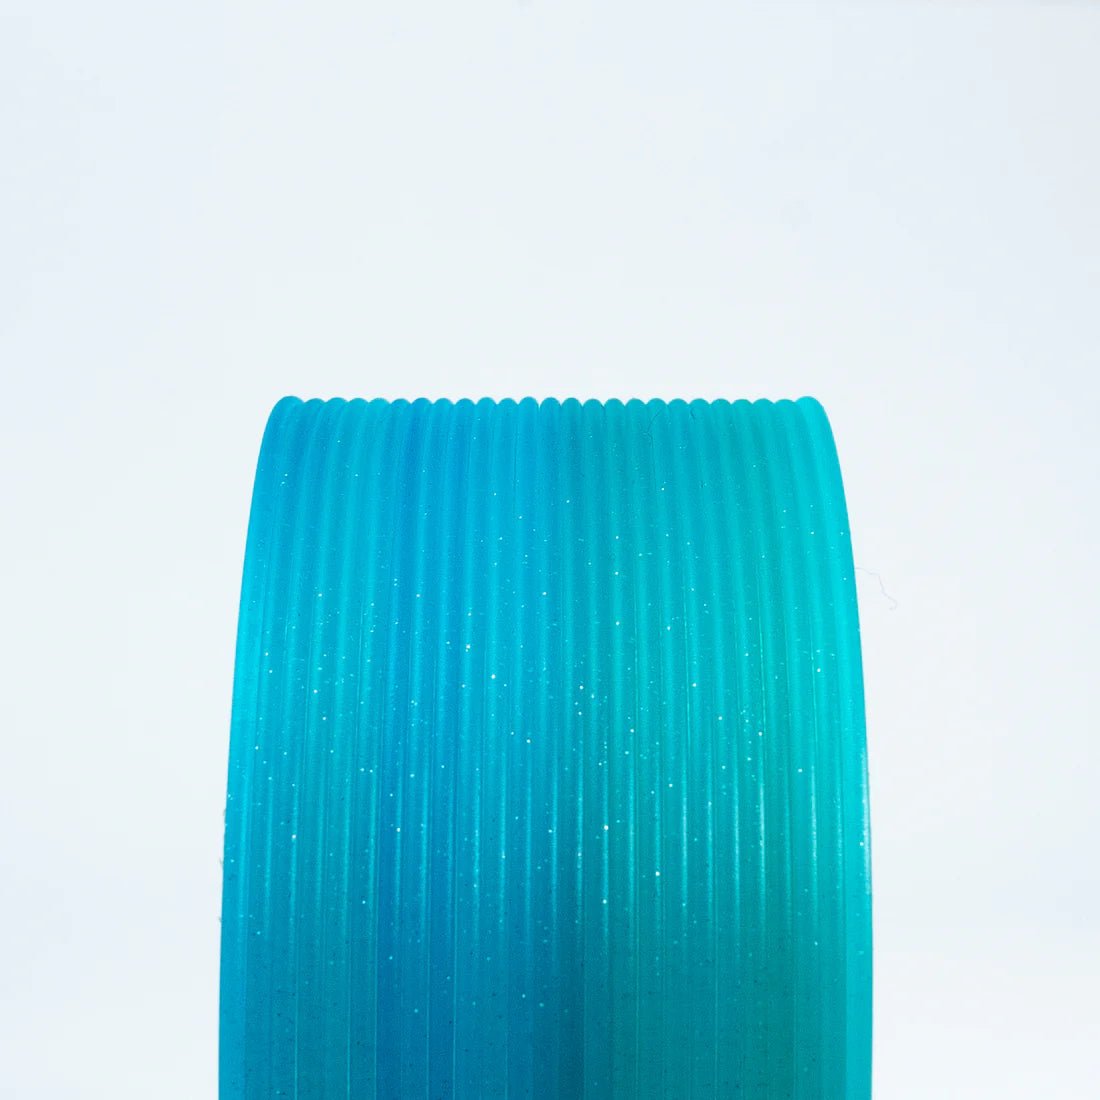 ProtoPasta Marine Dream Blue Multicolor HTPLA (500g) - West3D Printing - ProtoPasta